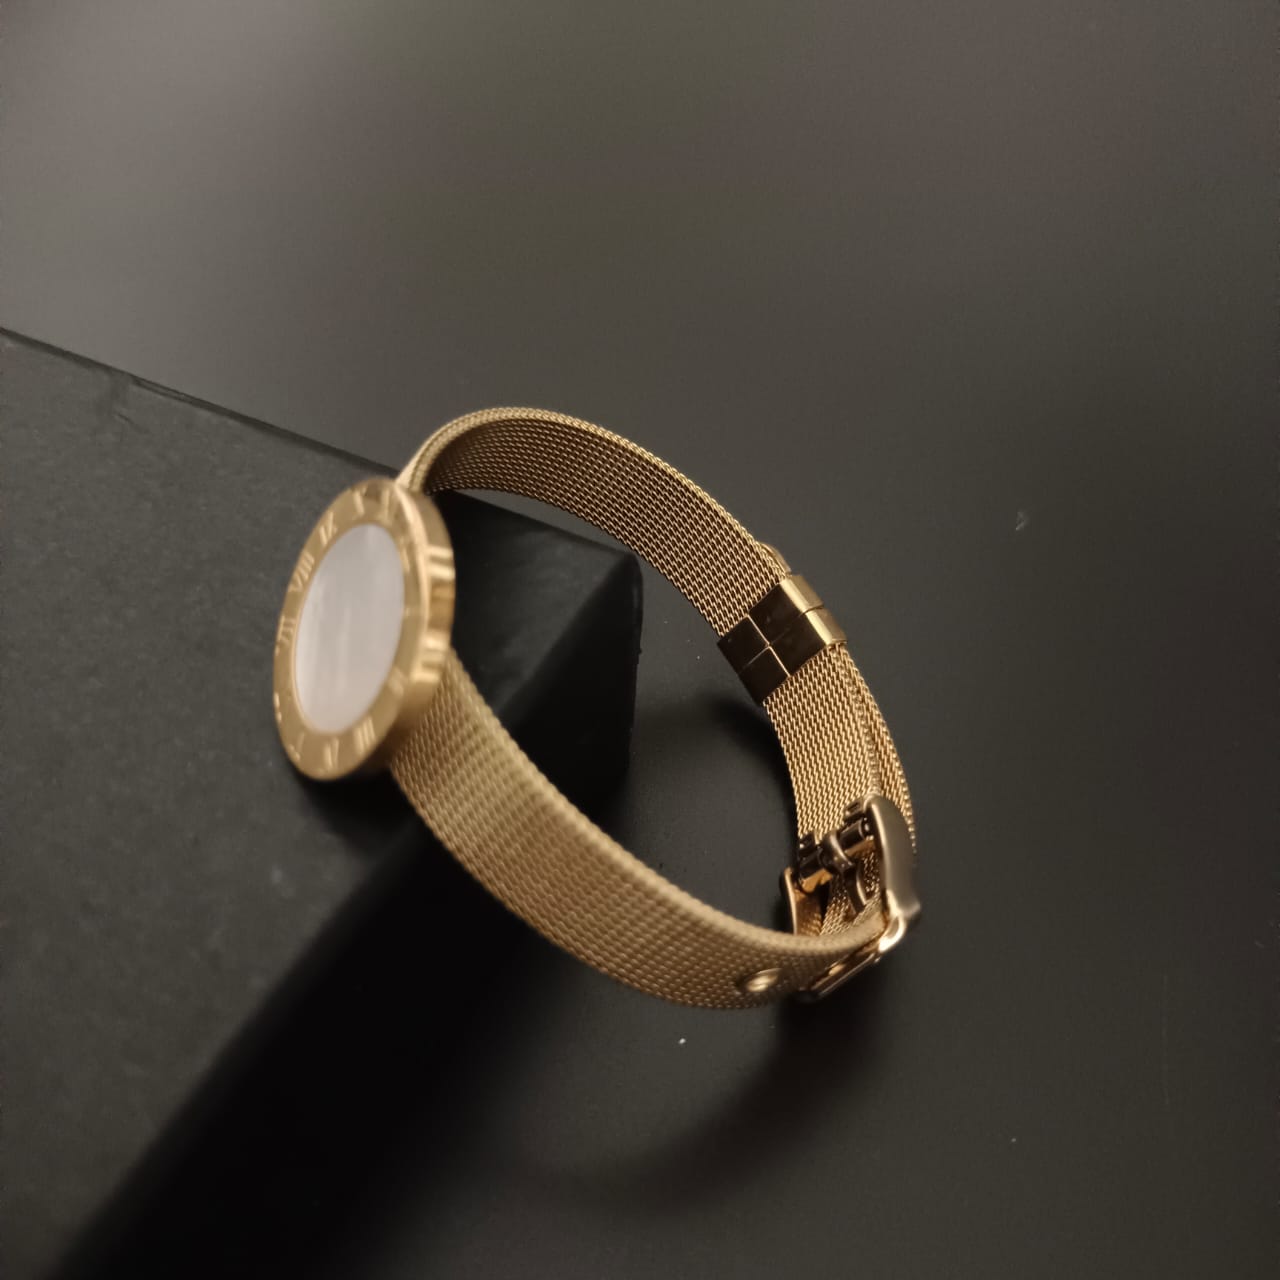 New Golden Watch Design Bracelet For Women and Girl- (White Gold Dial)